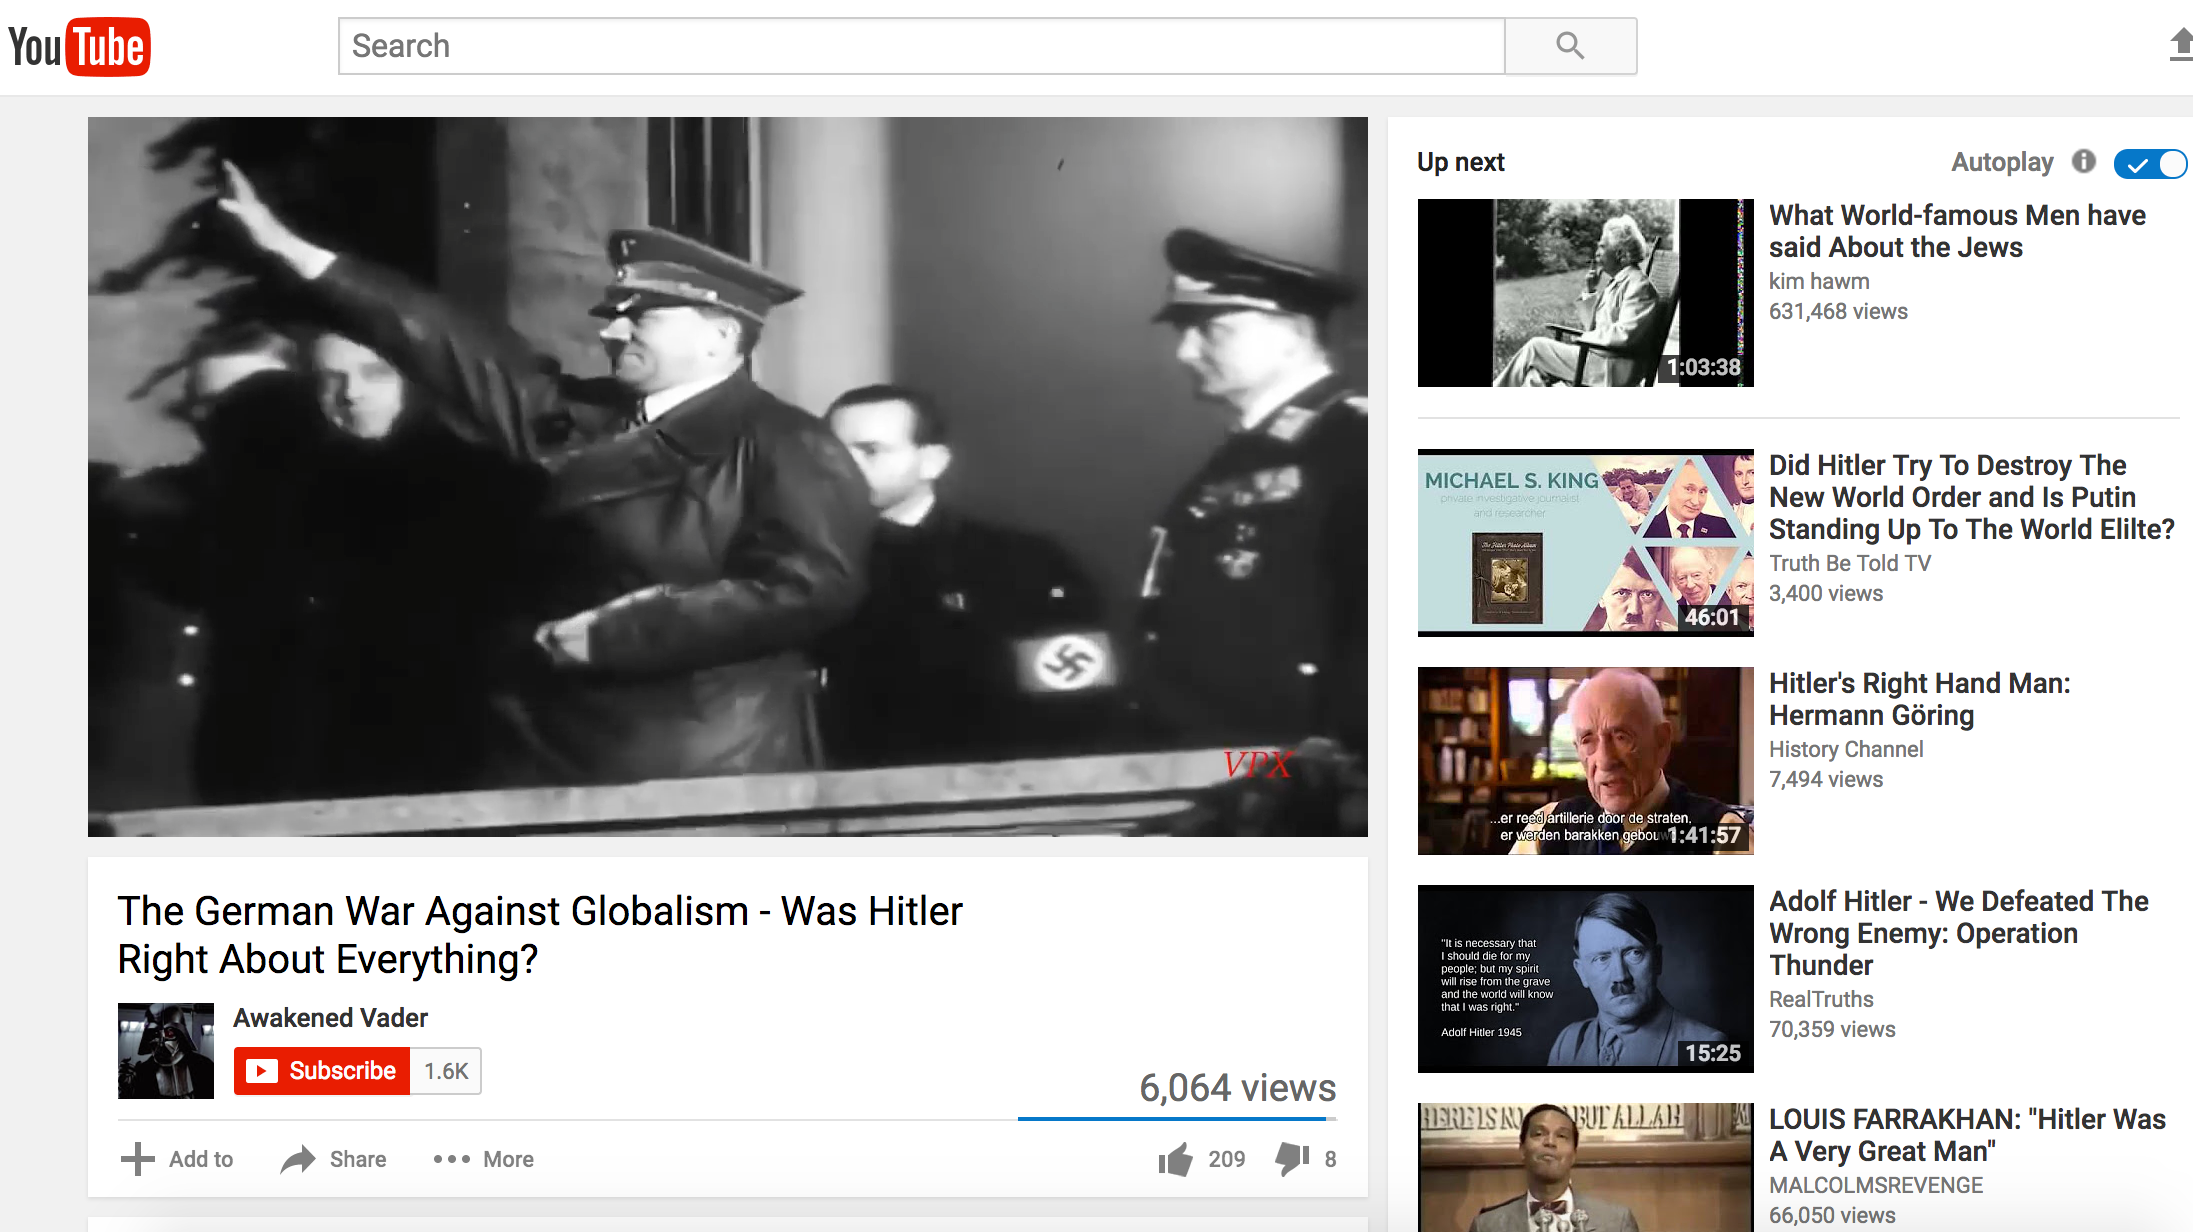 YouTube Begins Quarantining Extremist Videos